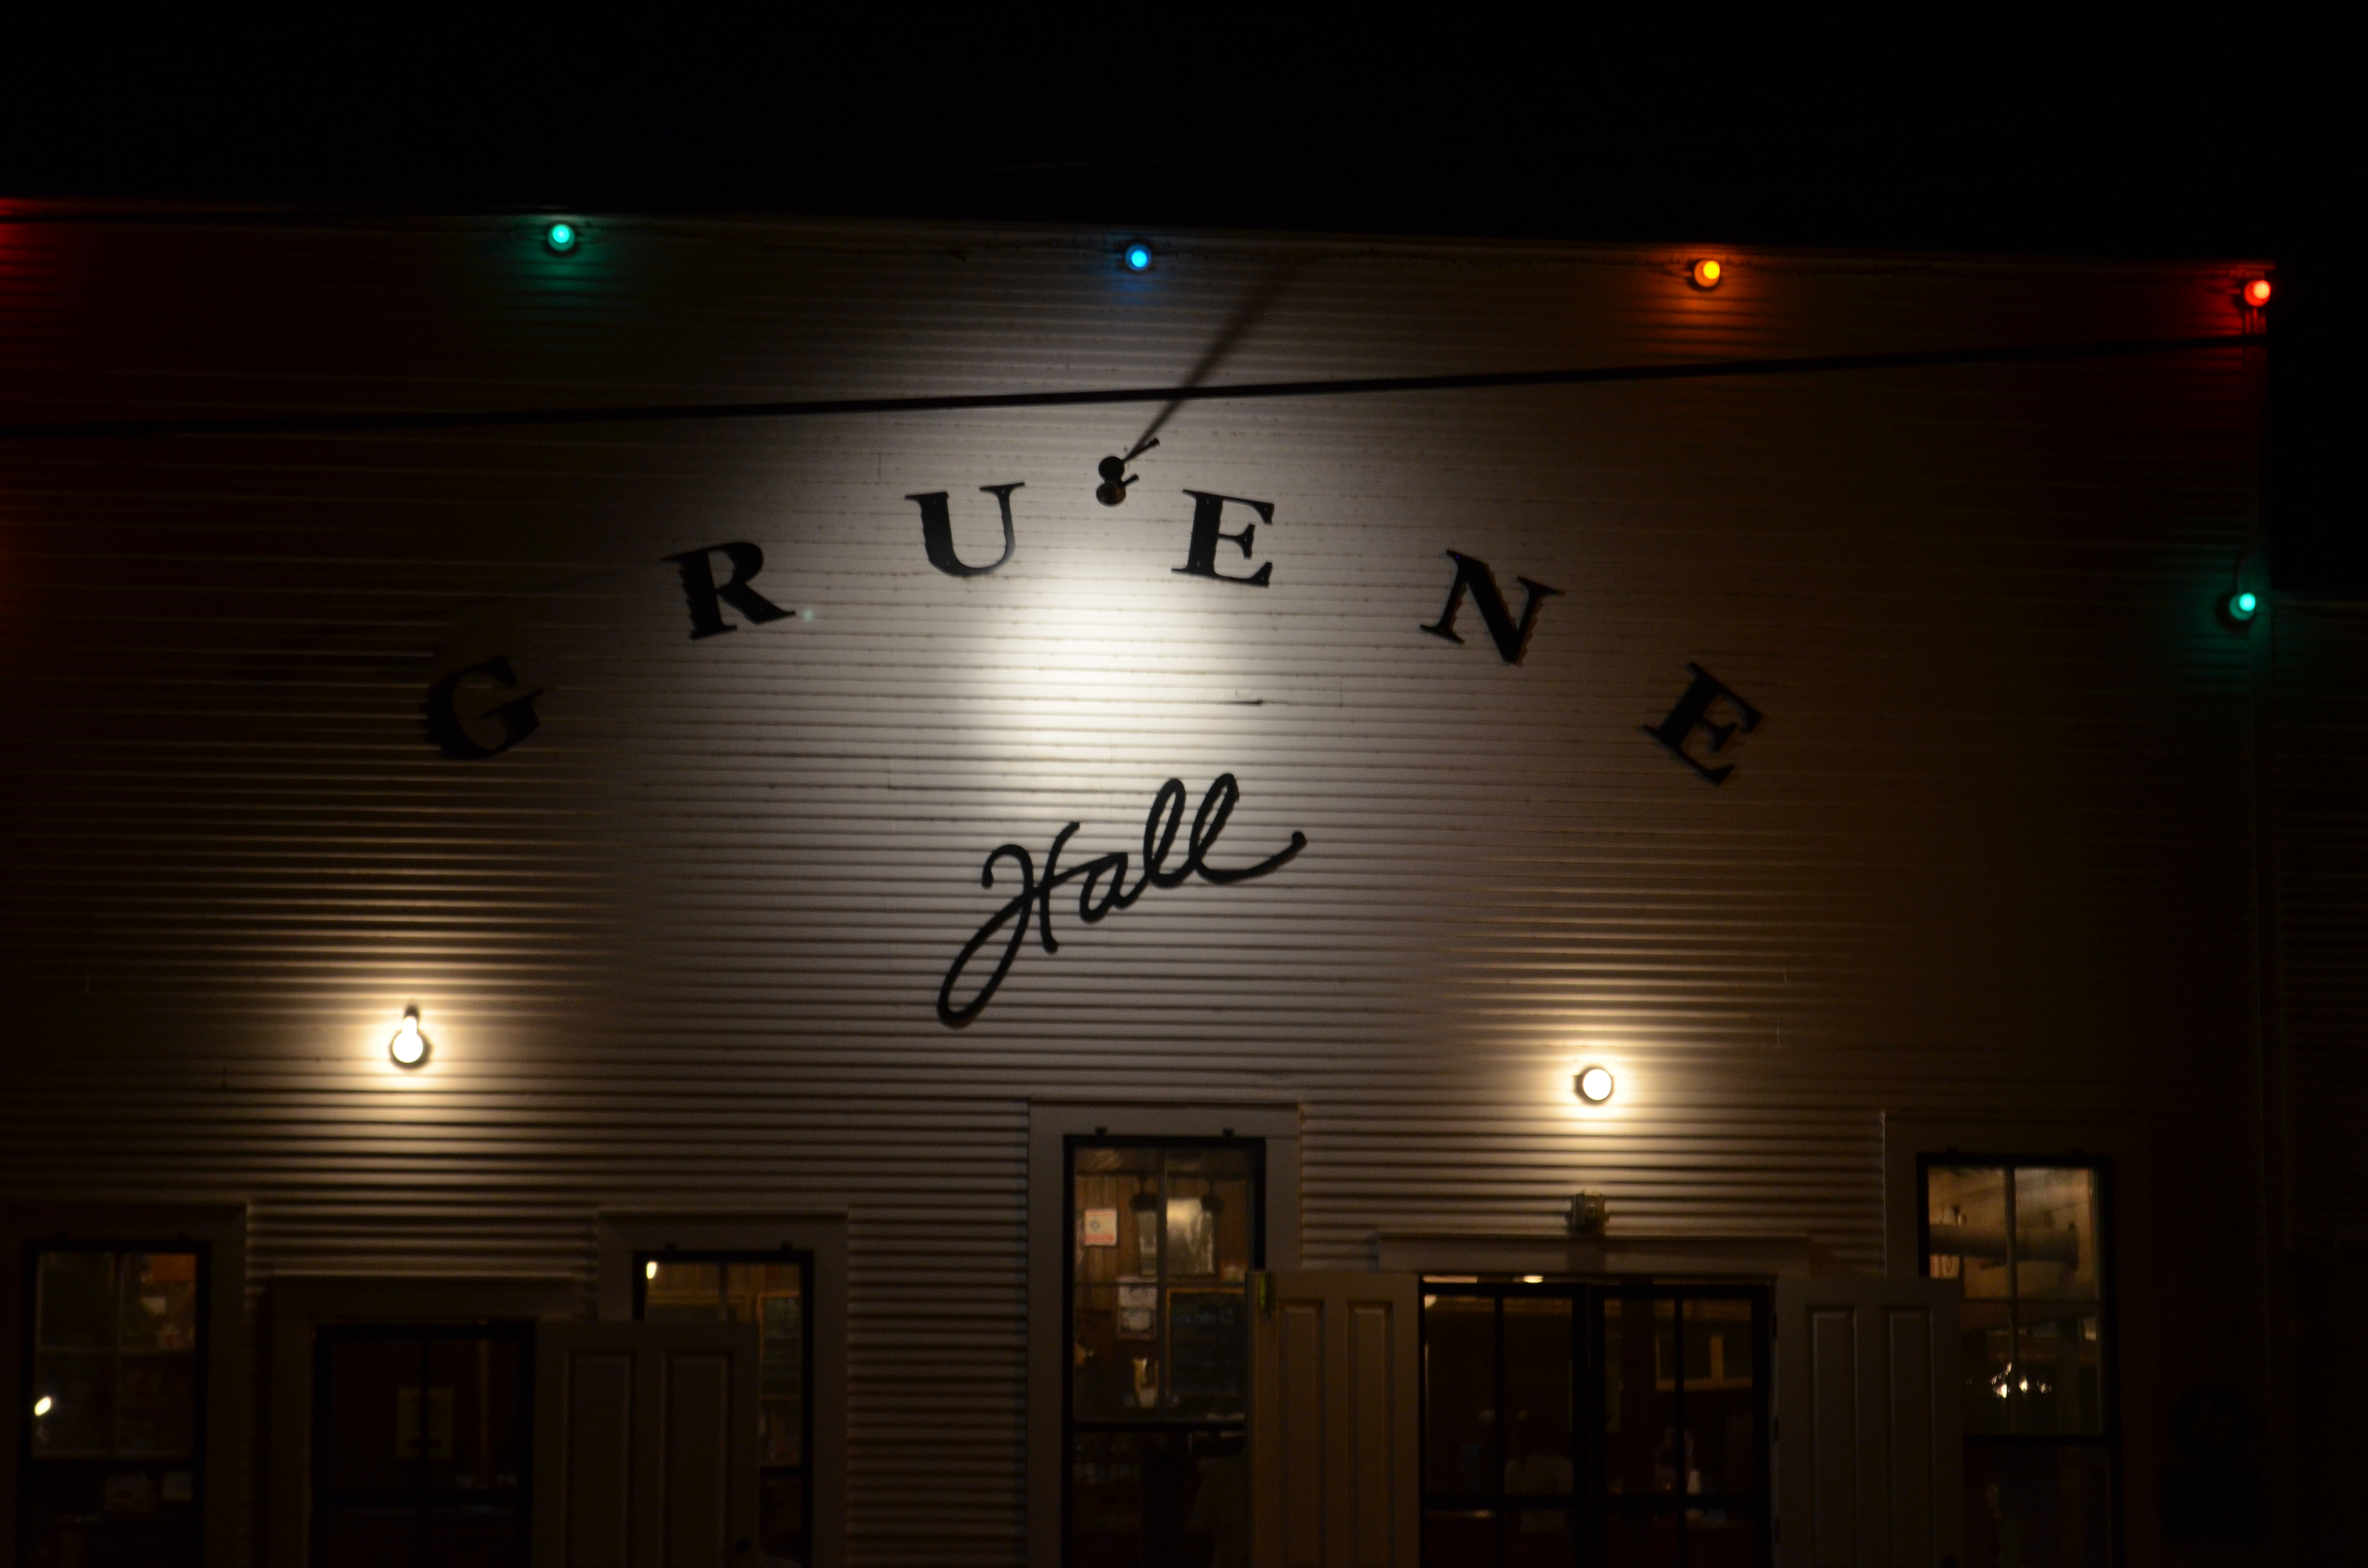 Historic Gruene Hall lit up at night.